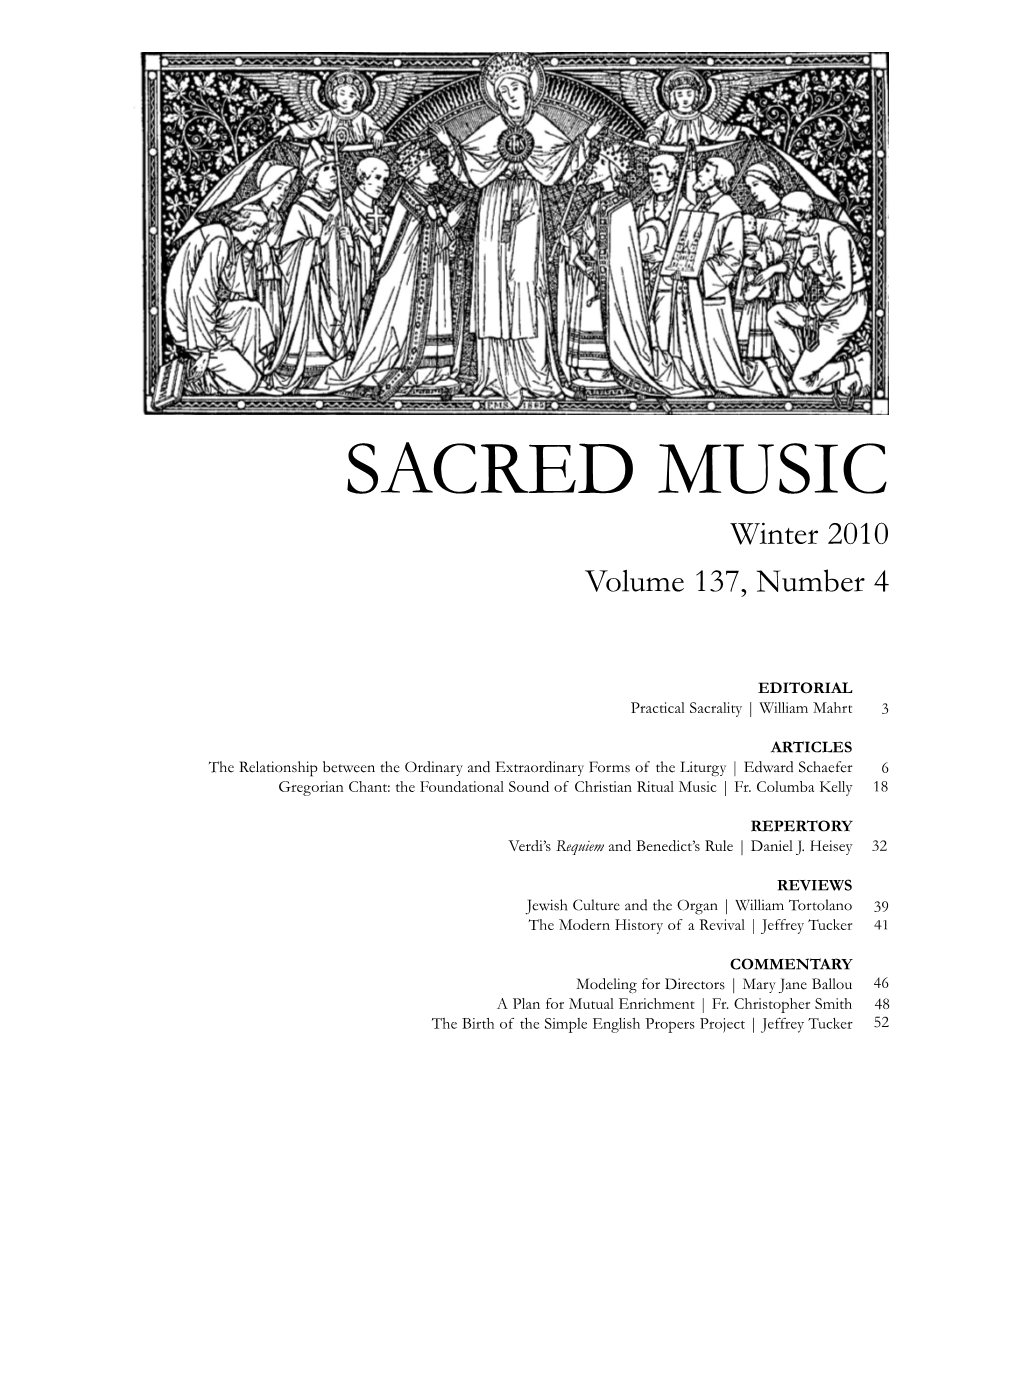 SACRED MUSIC Winter 2010 Volume 137, Number 4